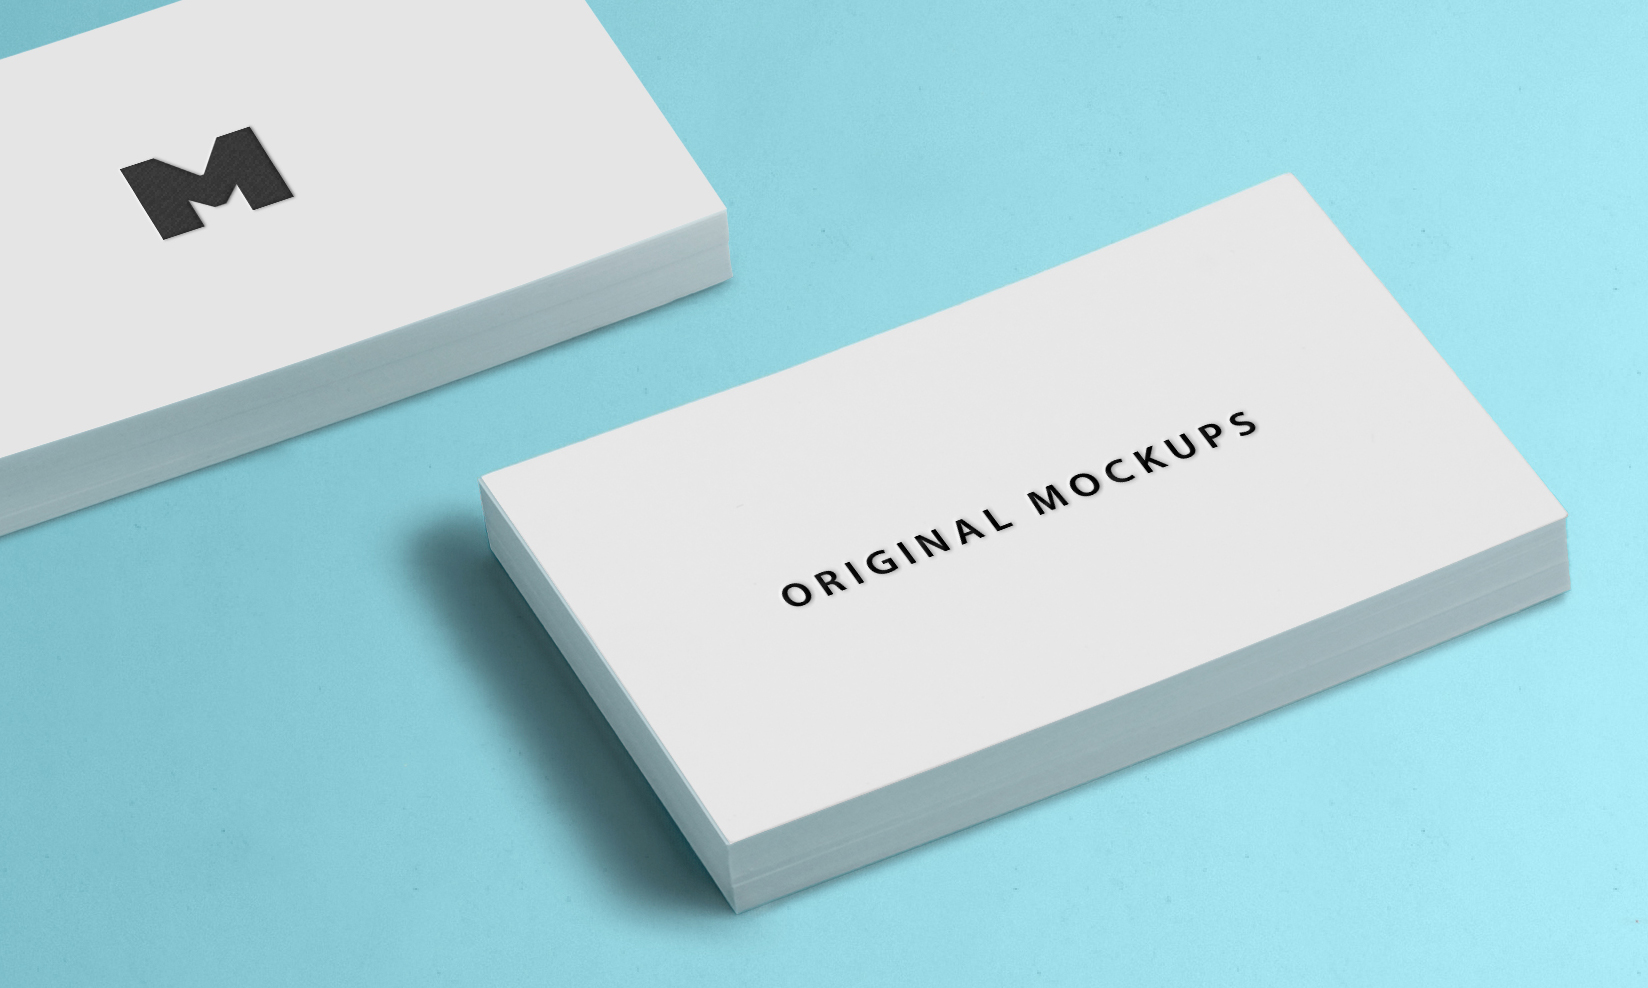 简约风企业名片设计样机模板03 Business Card Mockup 03插图(2)